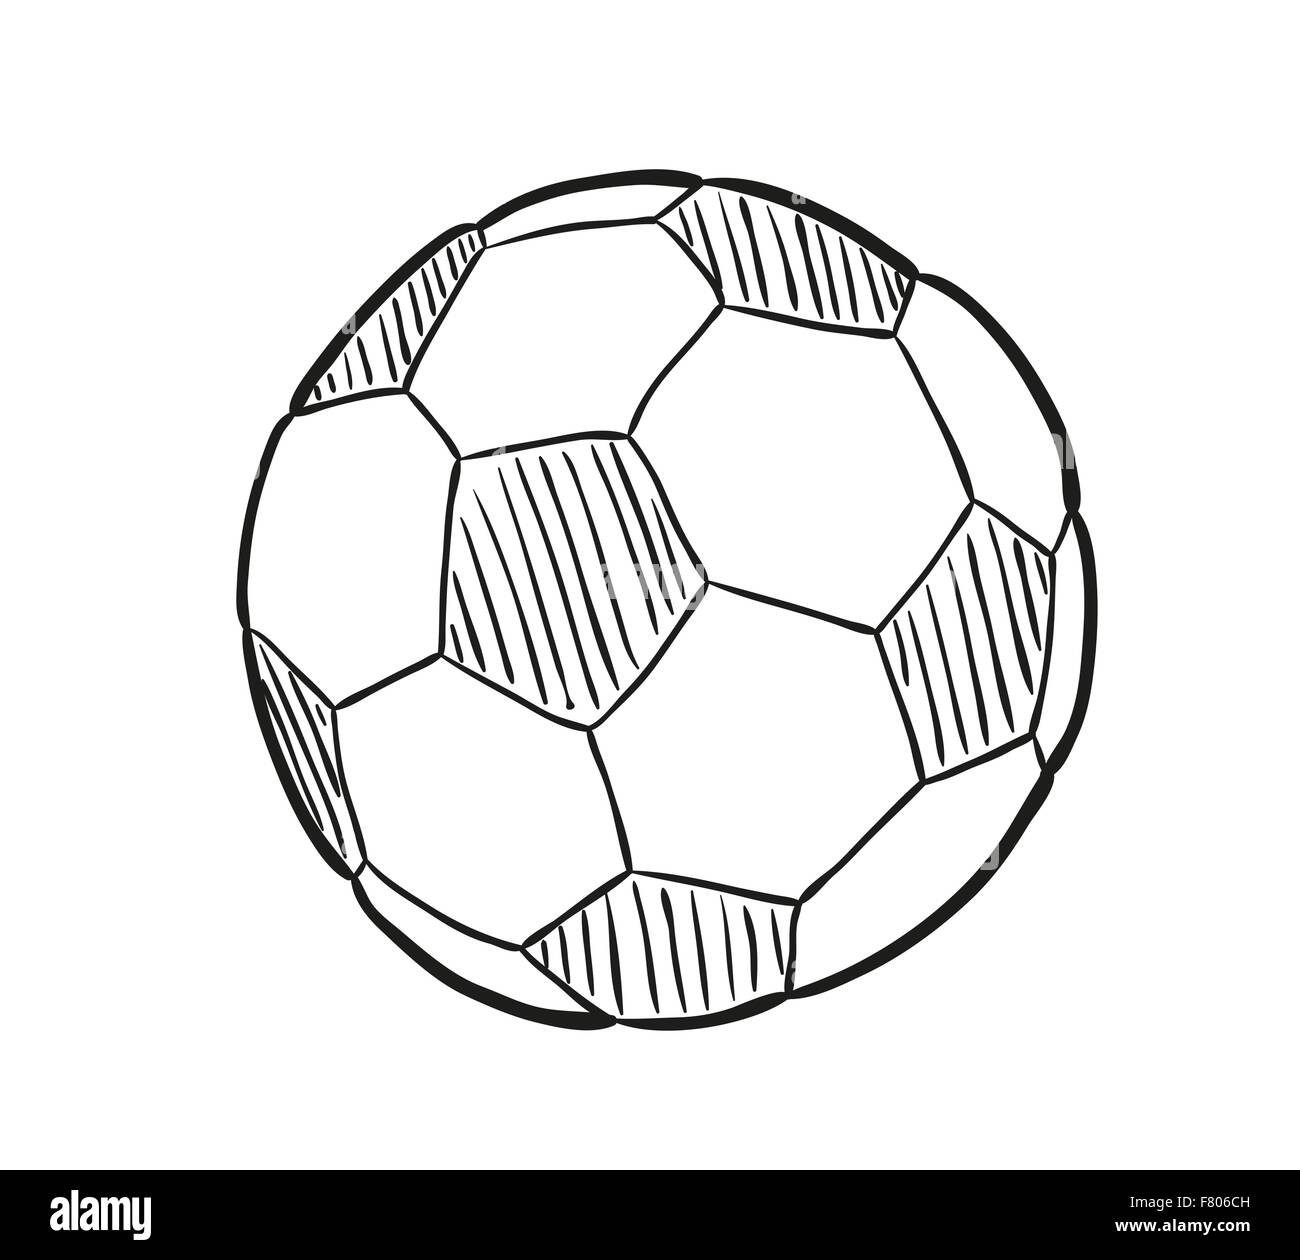 Skizze des Fußball-ball Stock-Vektorgrafik - Alamy